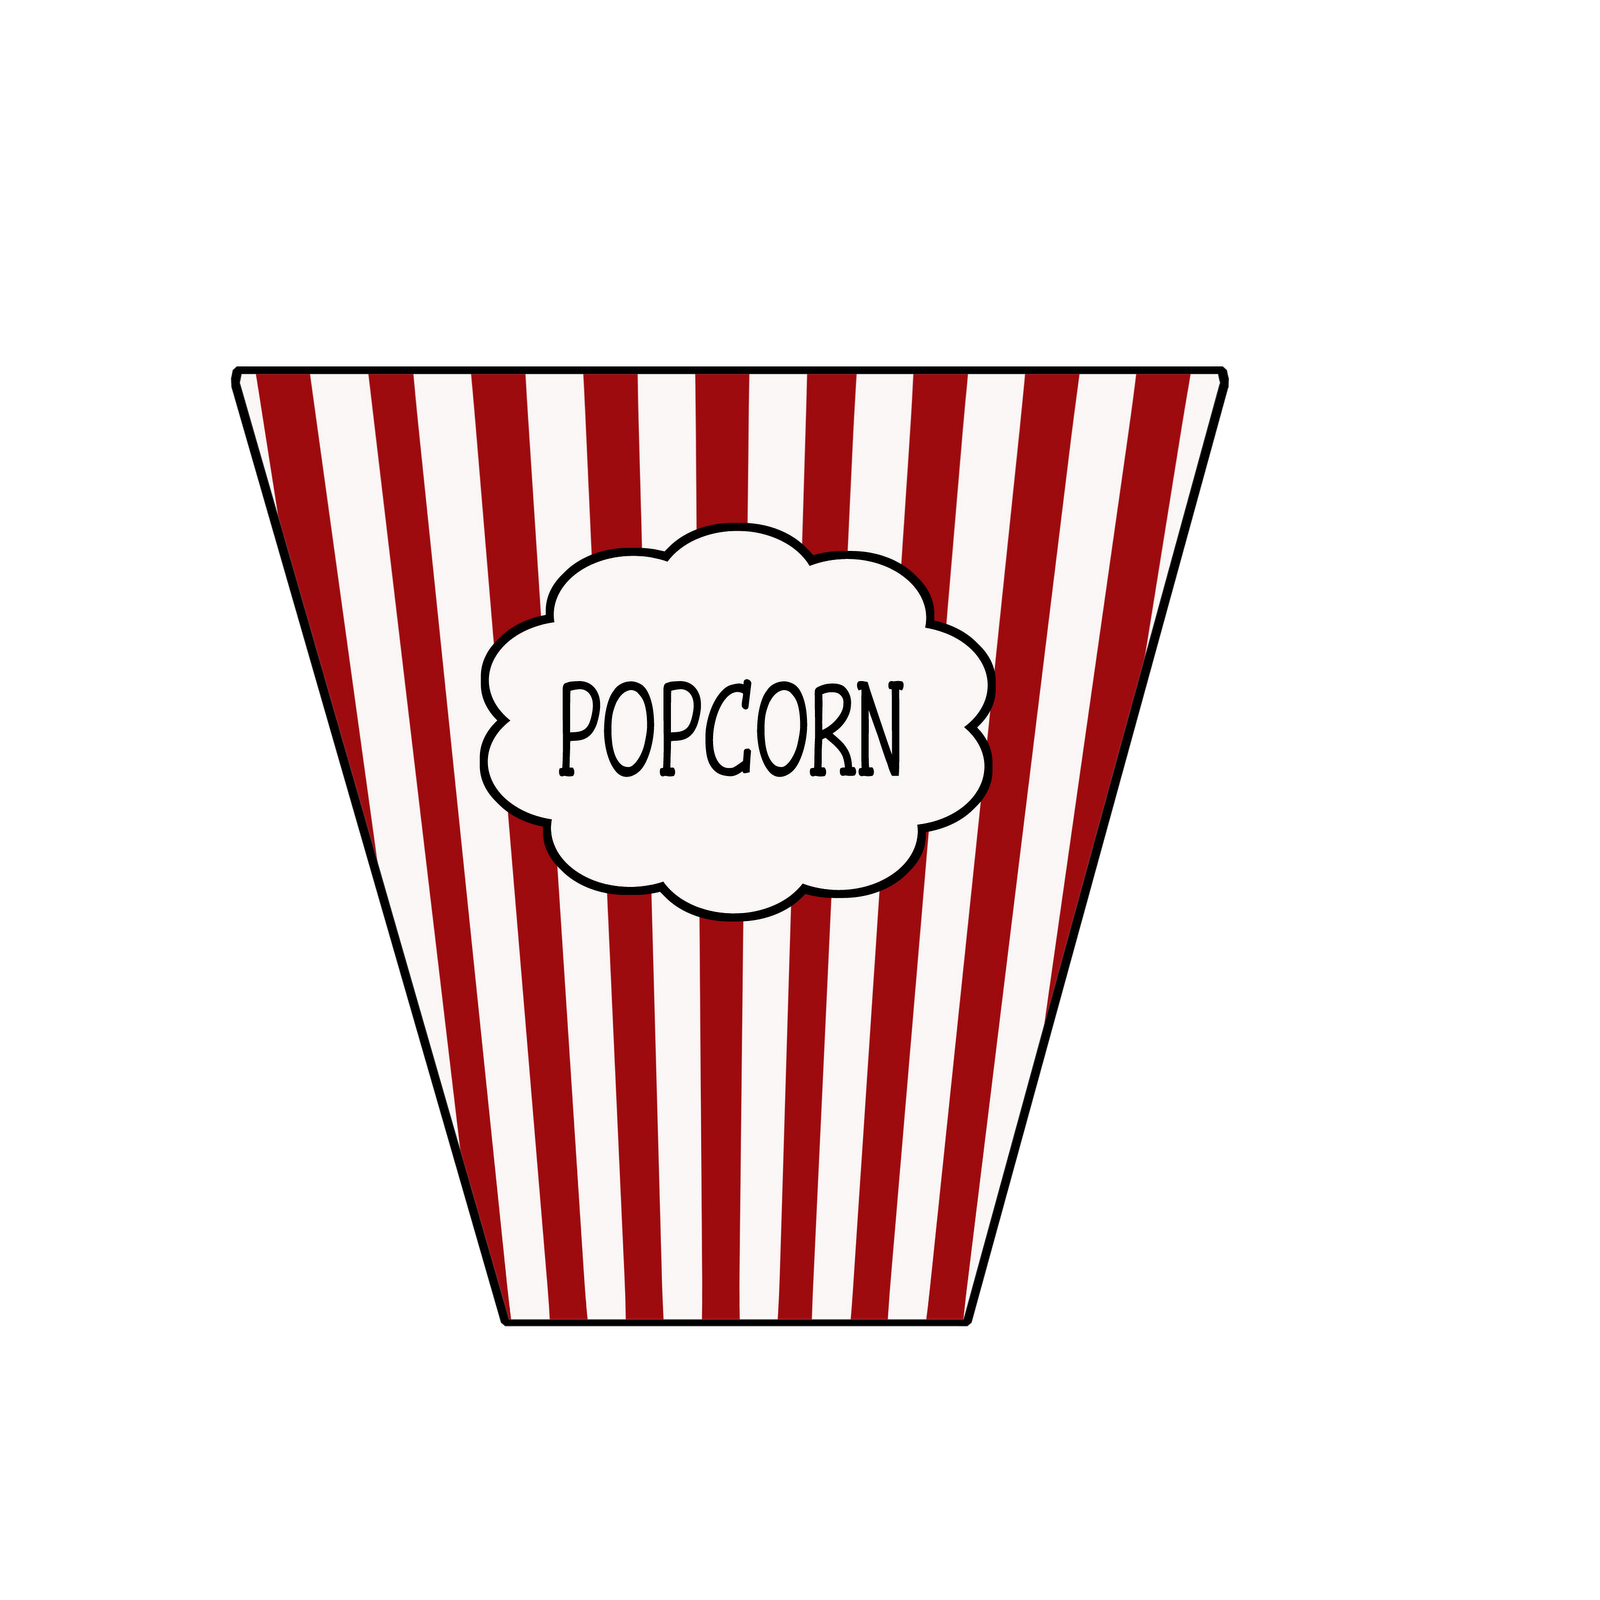 Popcorn Kernel Template Cliparts.co